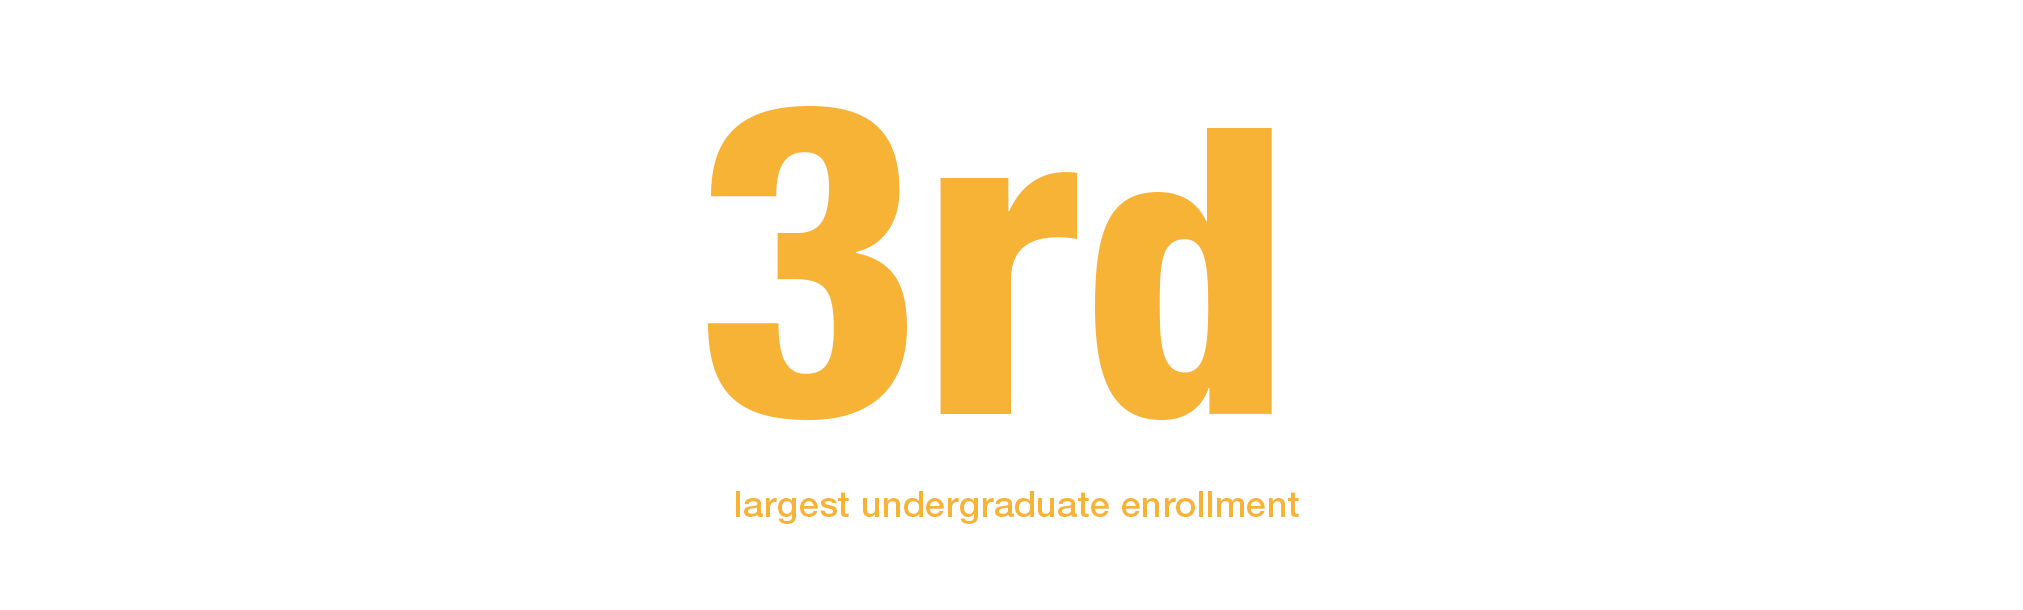 Third largest undergraduate enrollment